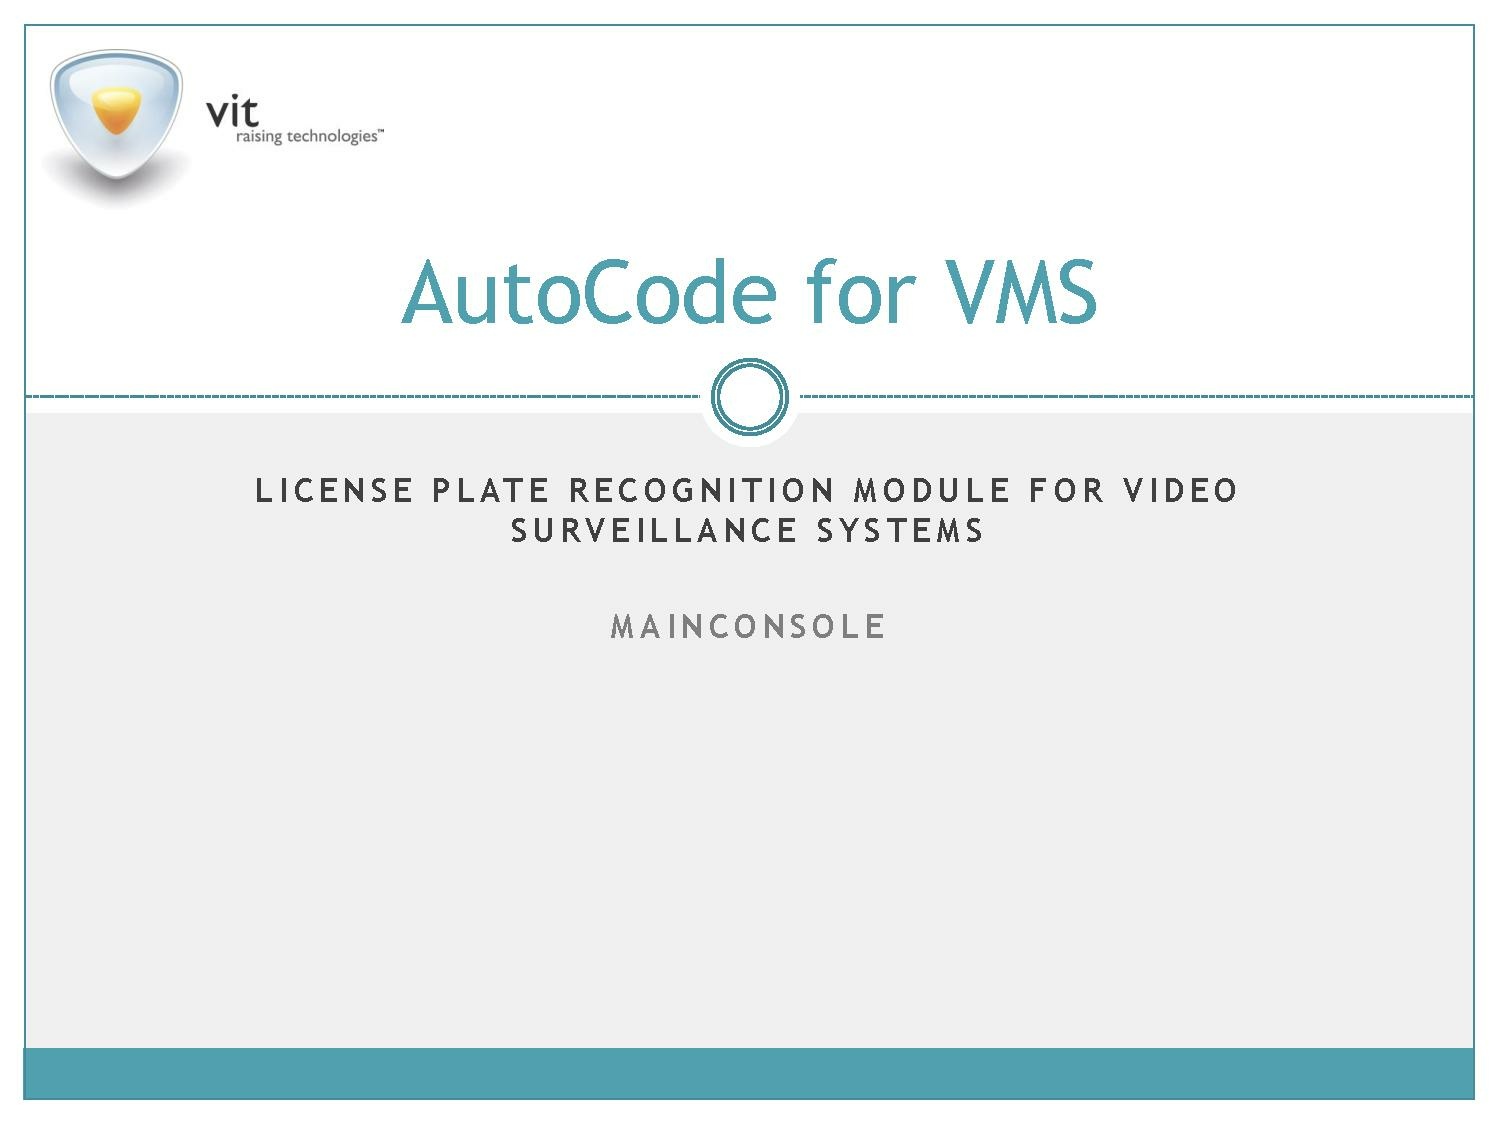 AutoCode for VMS Presentation